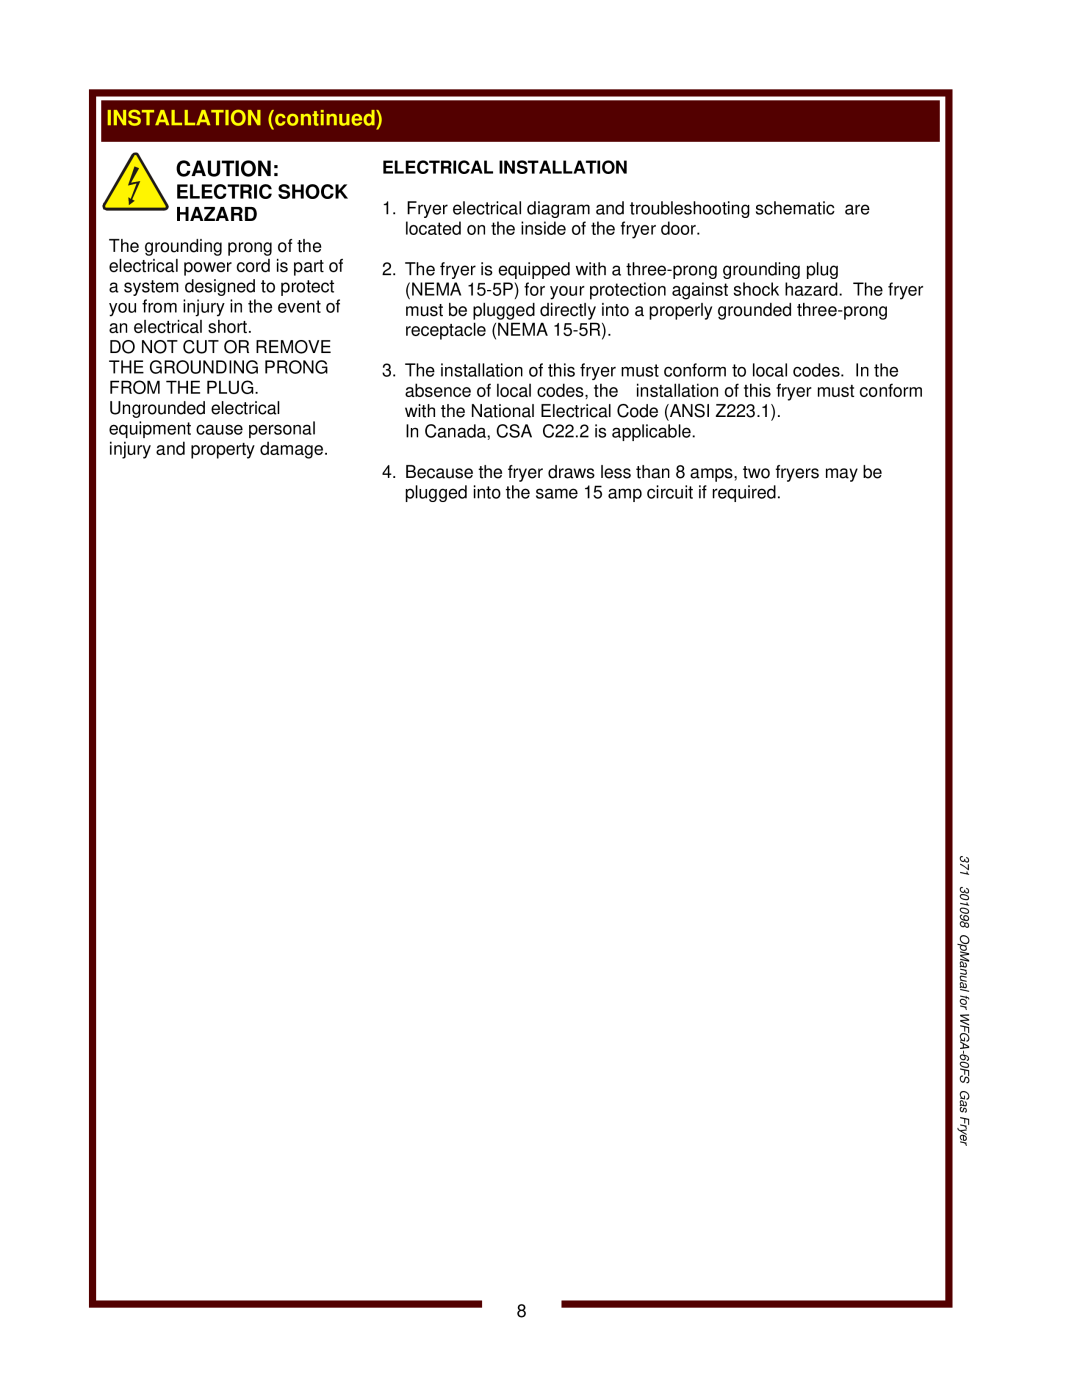 Wells WFGA-60FS operation manual Electric Shock Hazard, Electrical Installation 